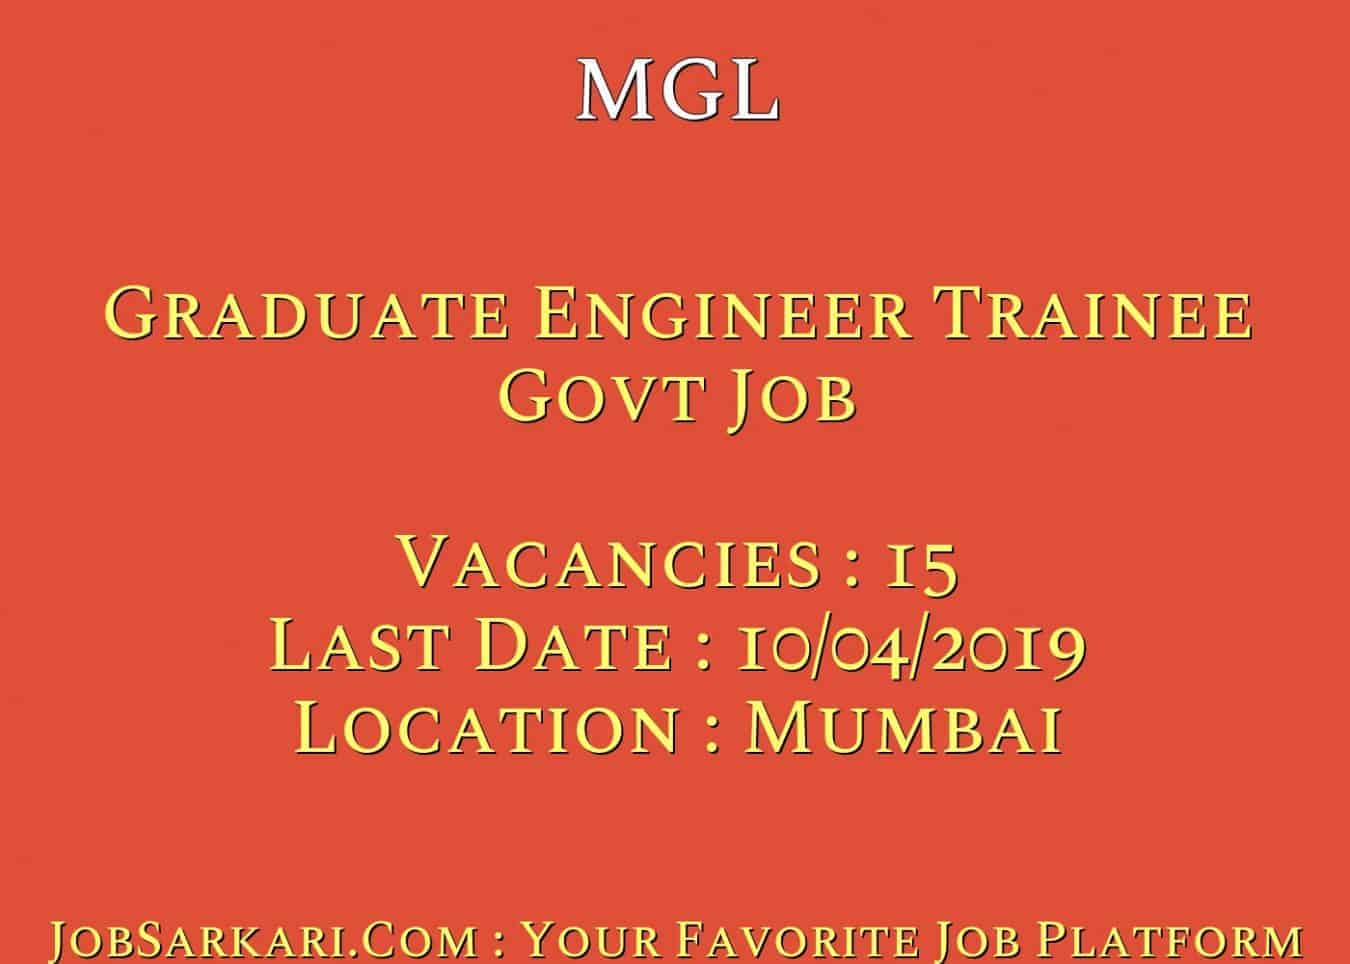 MGL Recruitment 2019 For Graduate Engineer Trainee Govt Job